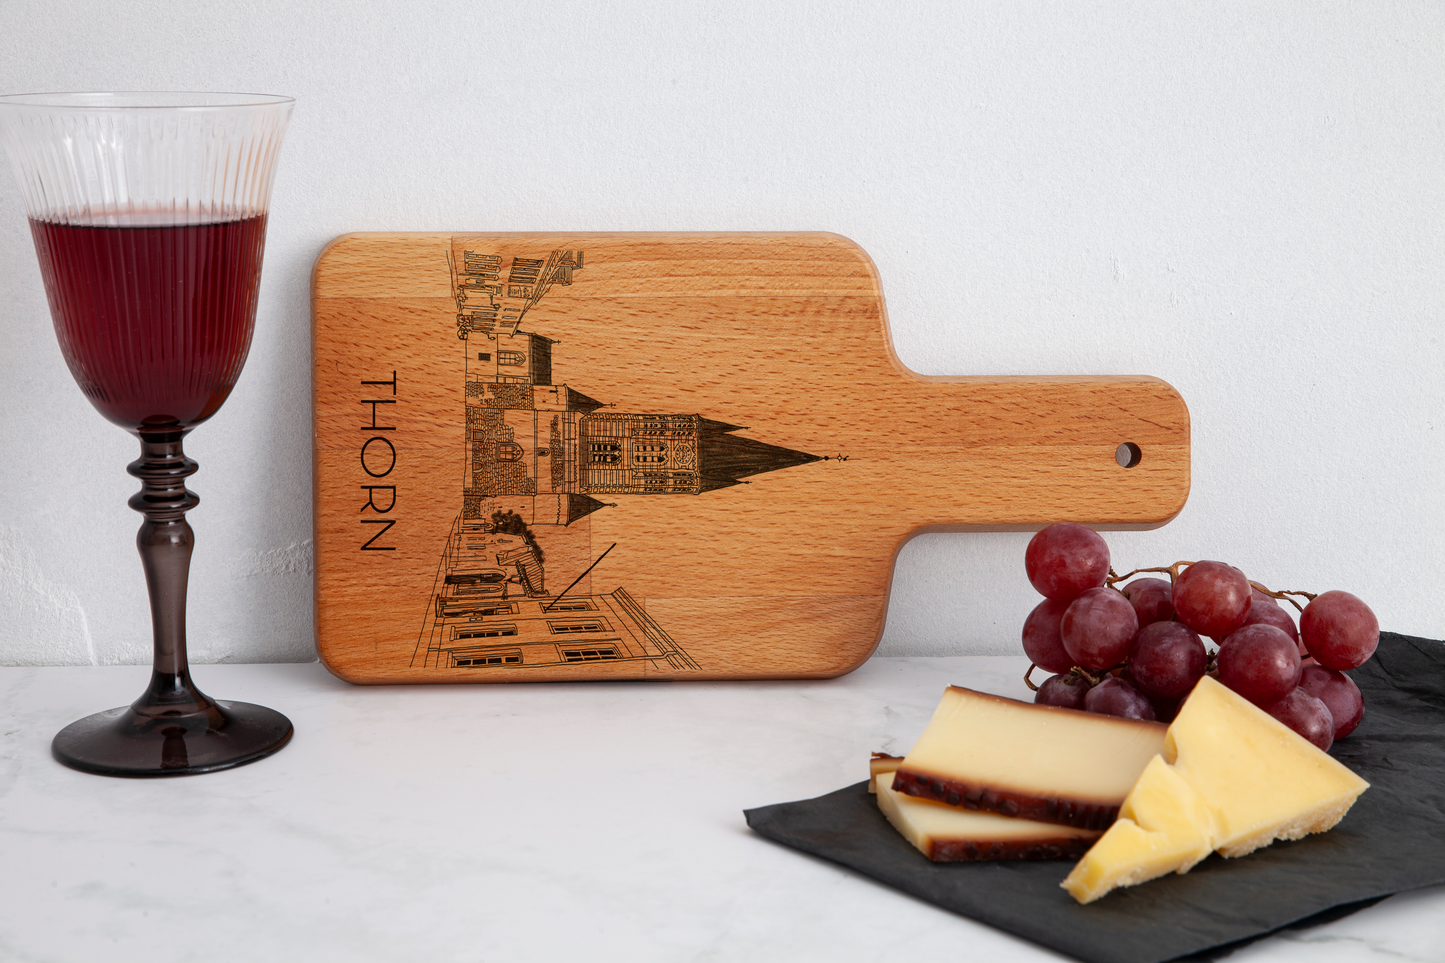 Thorn, Abdij Kerk, cheese board, horizontal